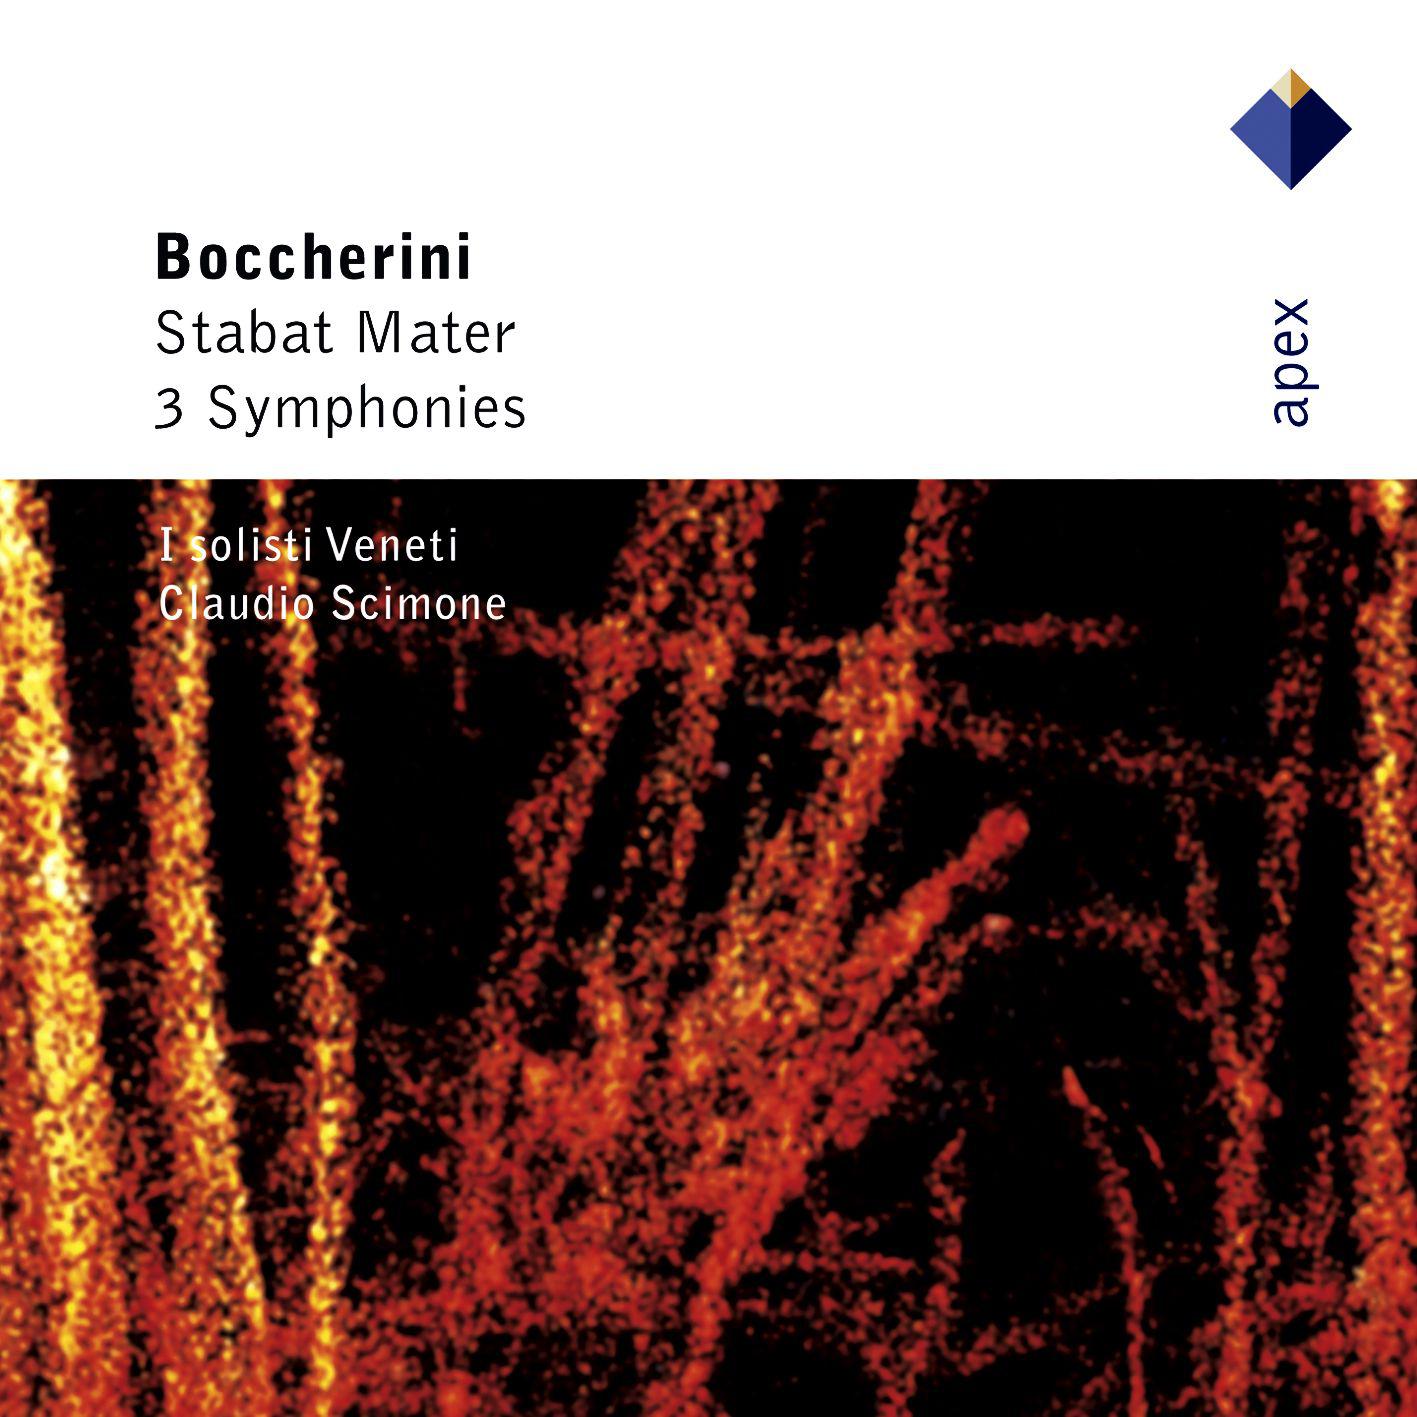 Boccherini : 15 Concert Arias : VI "Care luci che regnate"